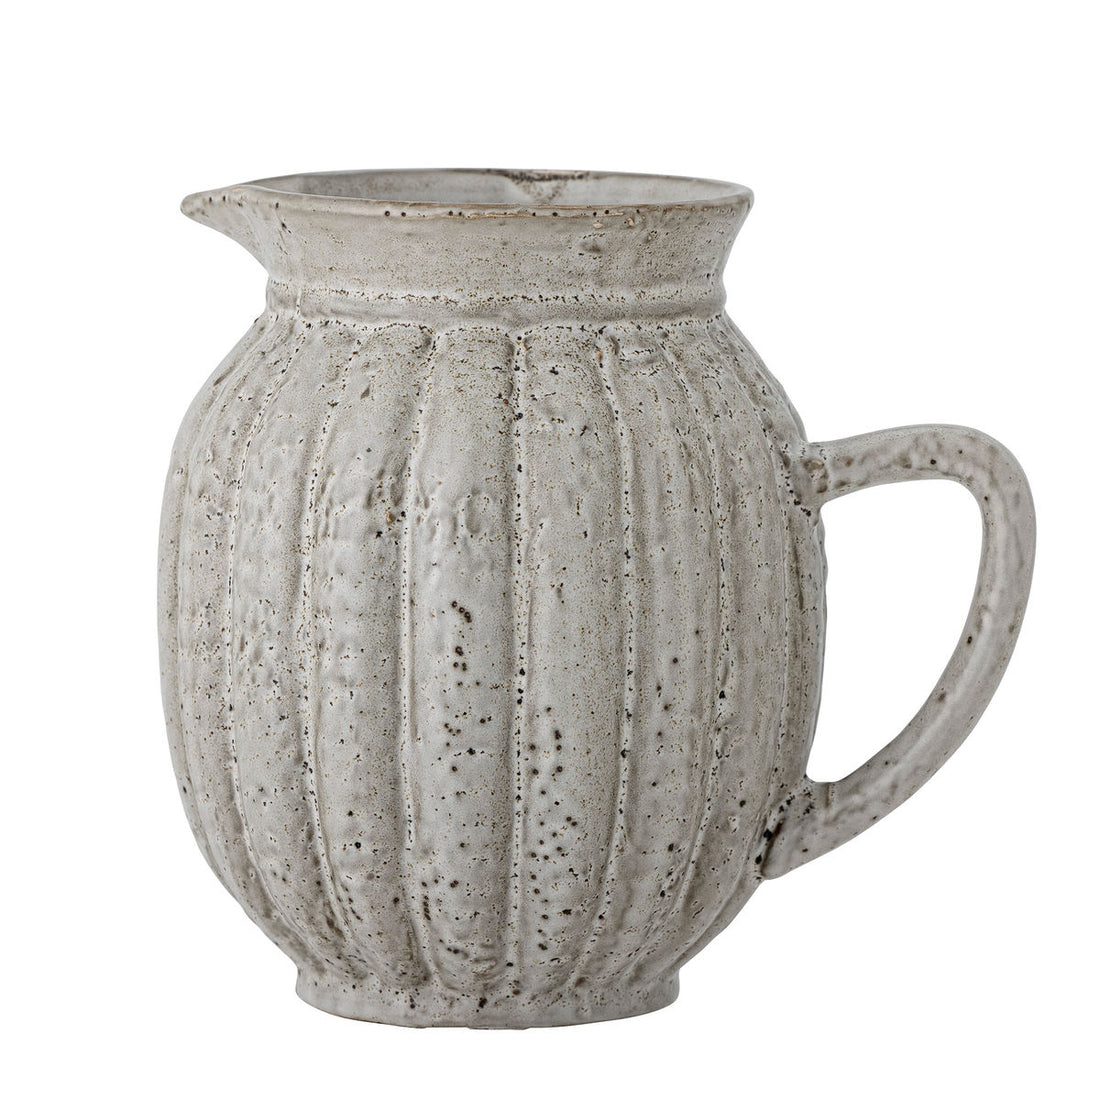 Bloomingville engrid pitcher, gray, stoneware